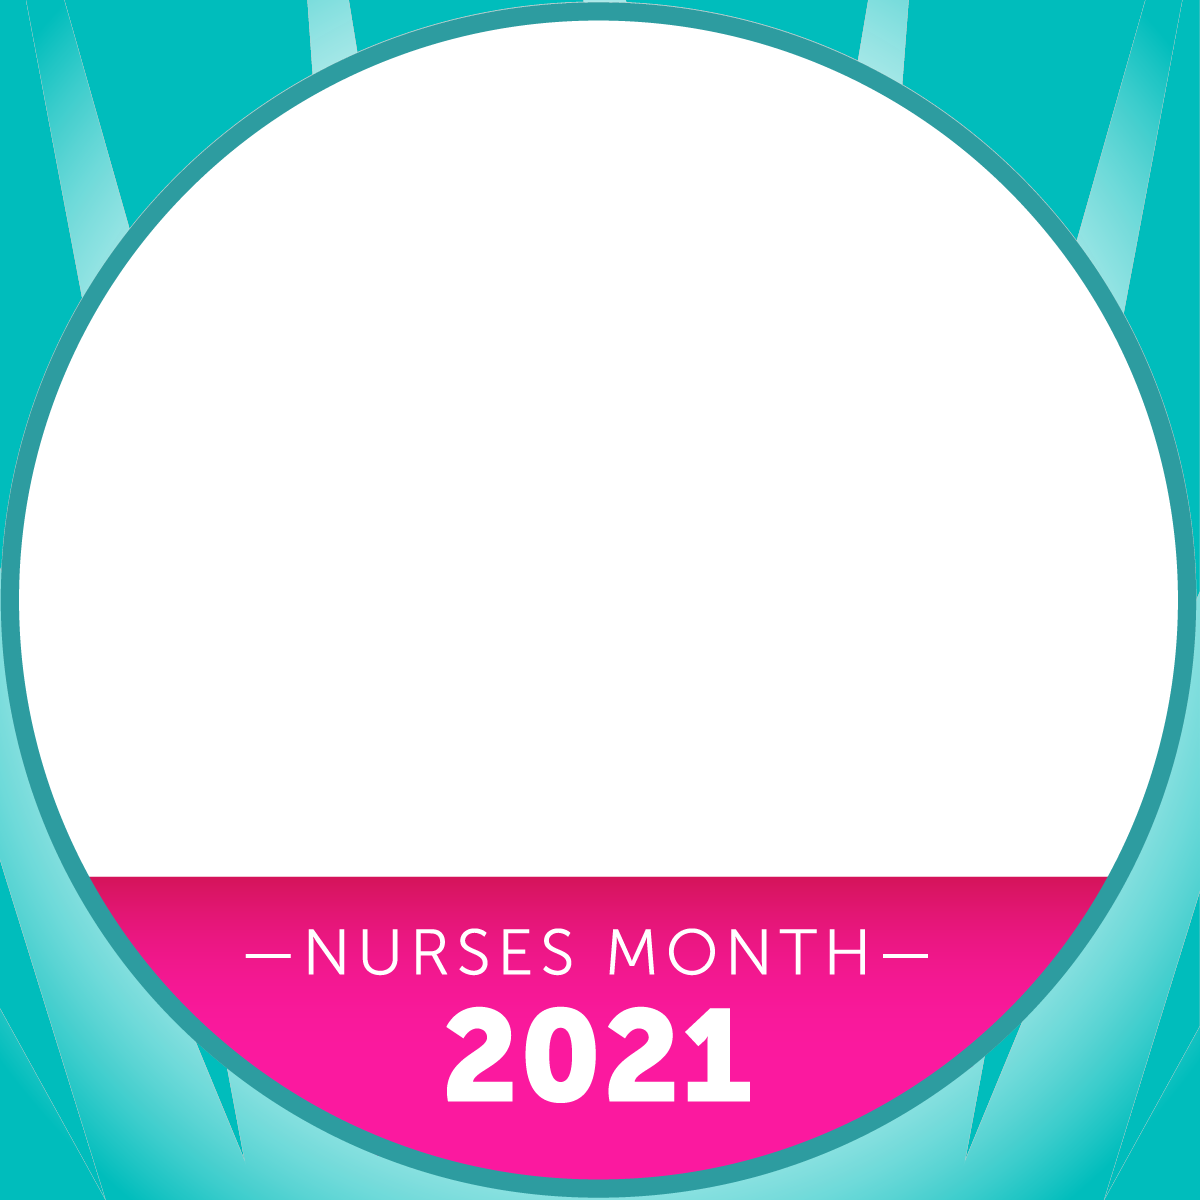 "Nurses Month 2021"